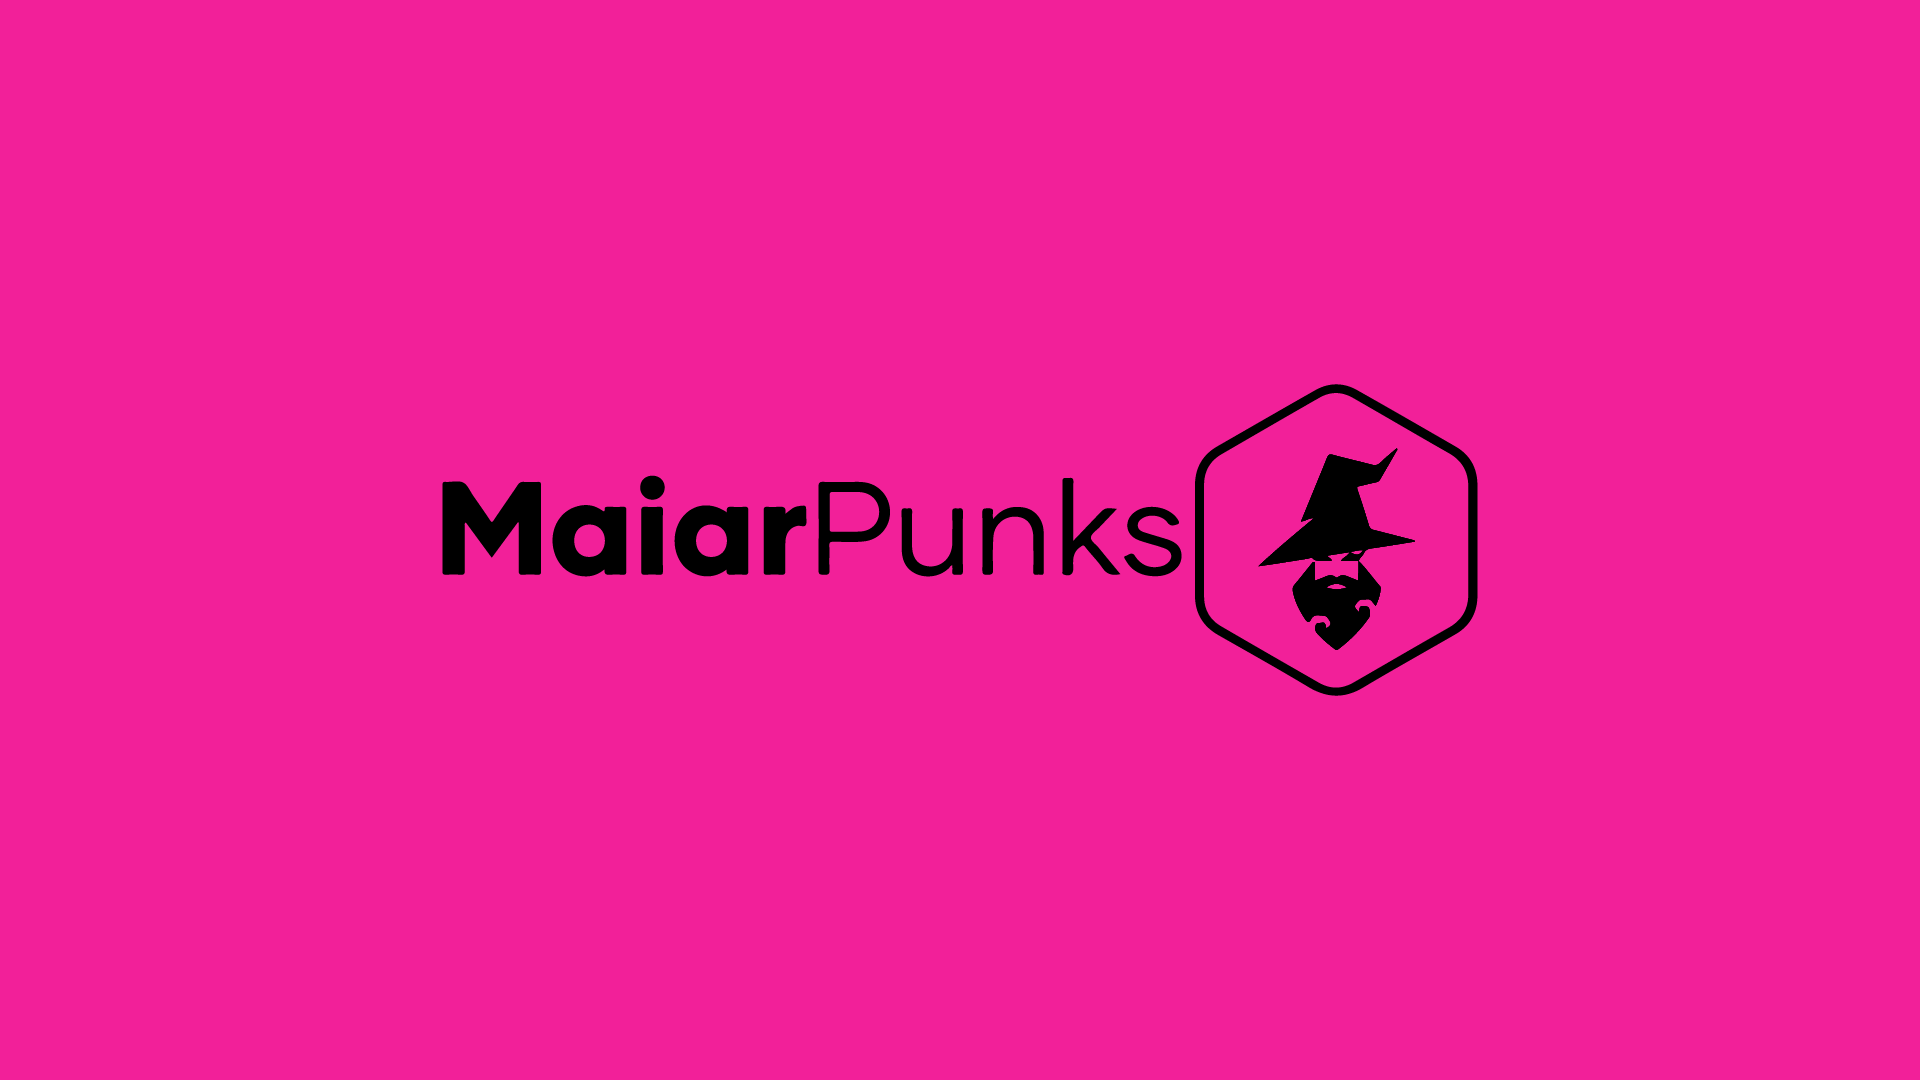 MaiarPunks